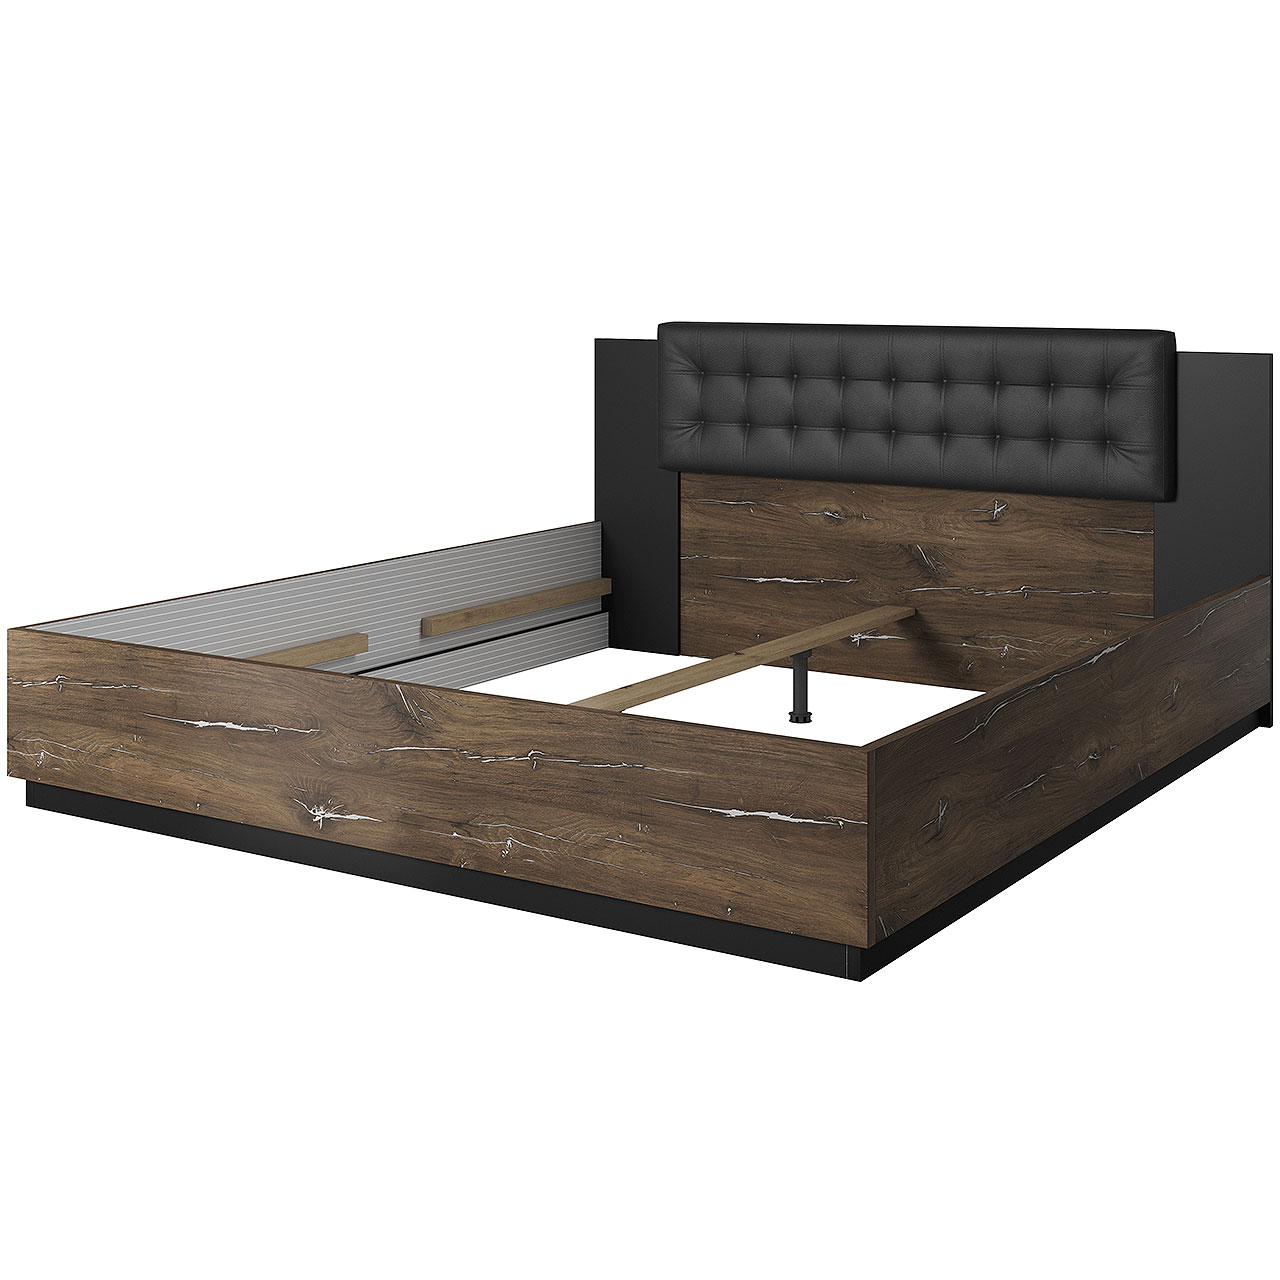 Bed 160x200 SIGMA SG31 oak flagstaf steel / black